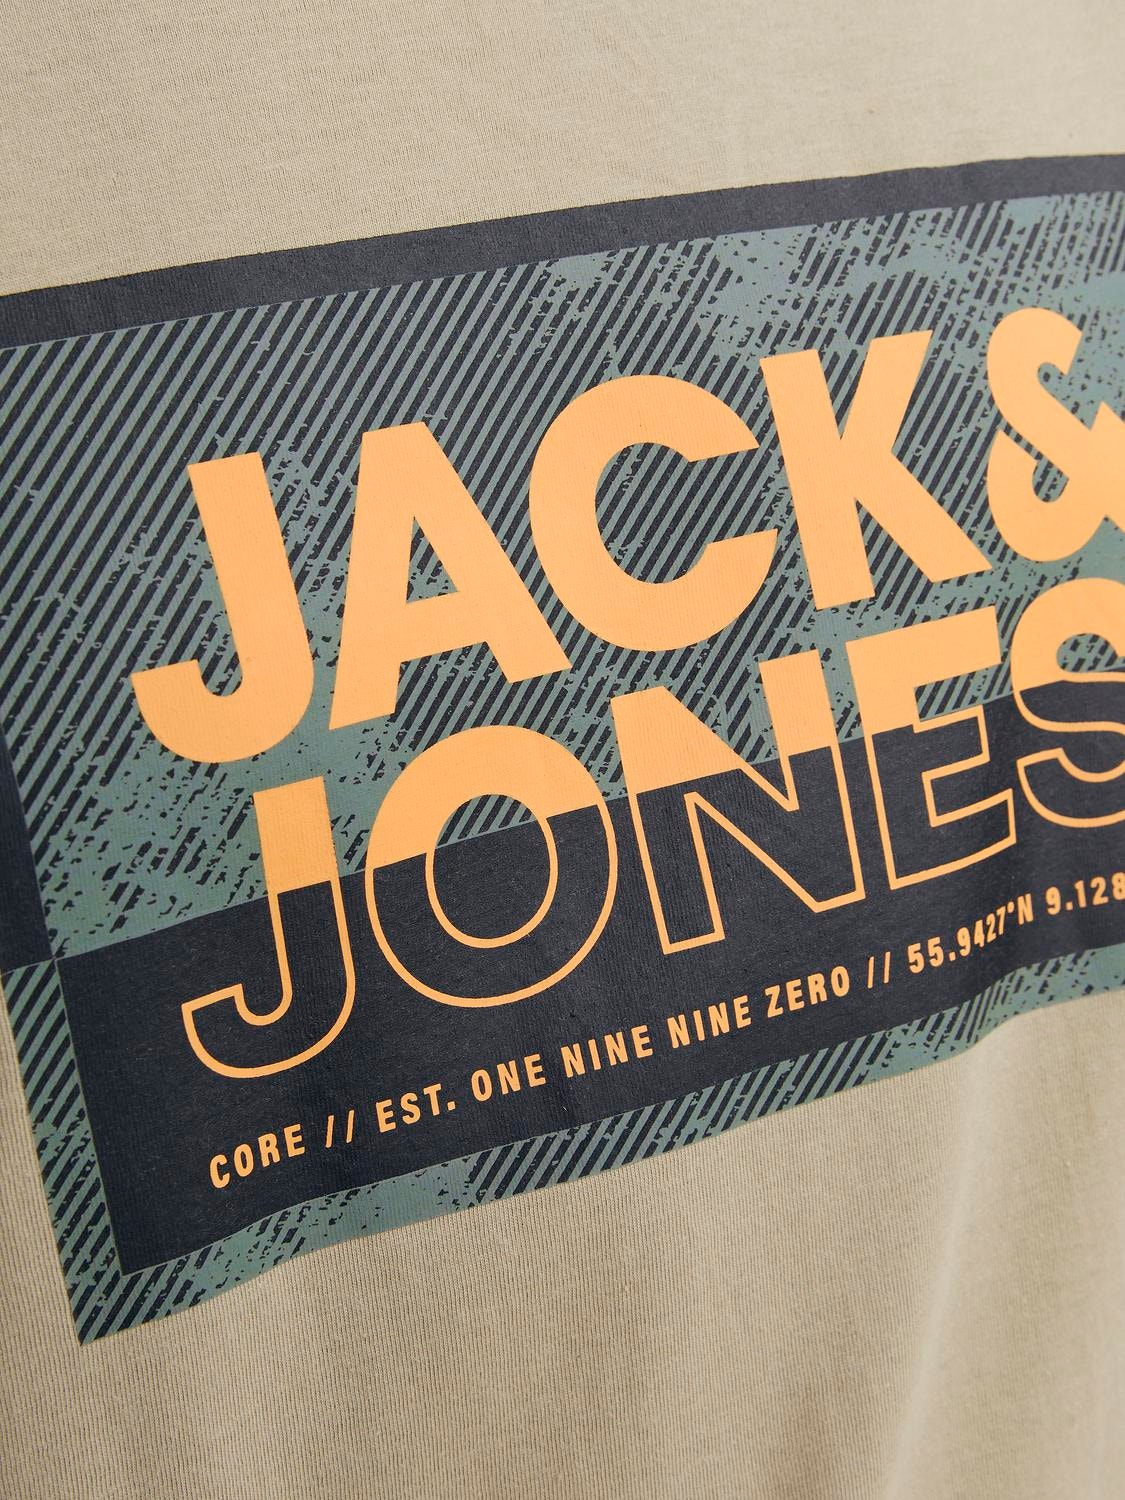 Jack & Jones Logo Ronde hals T-shirt -Crockery - 12253442